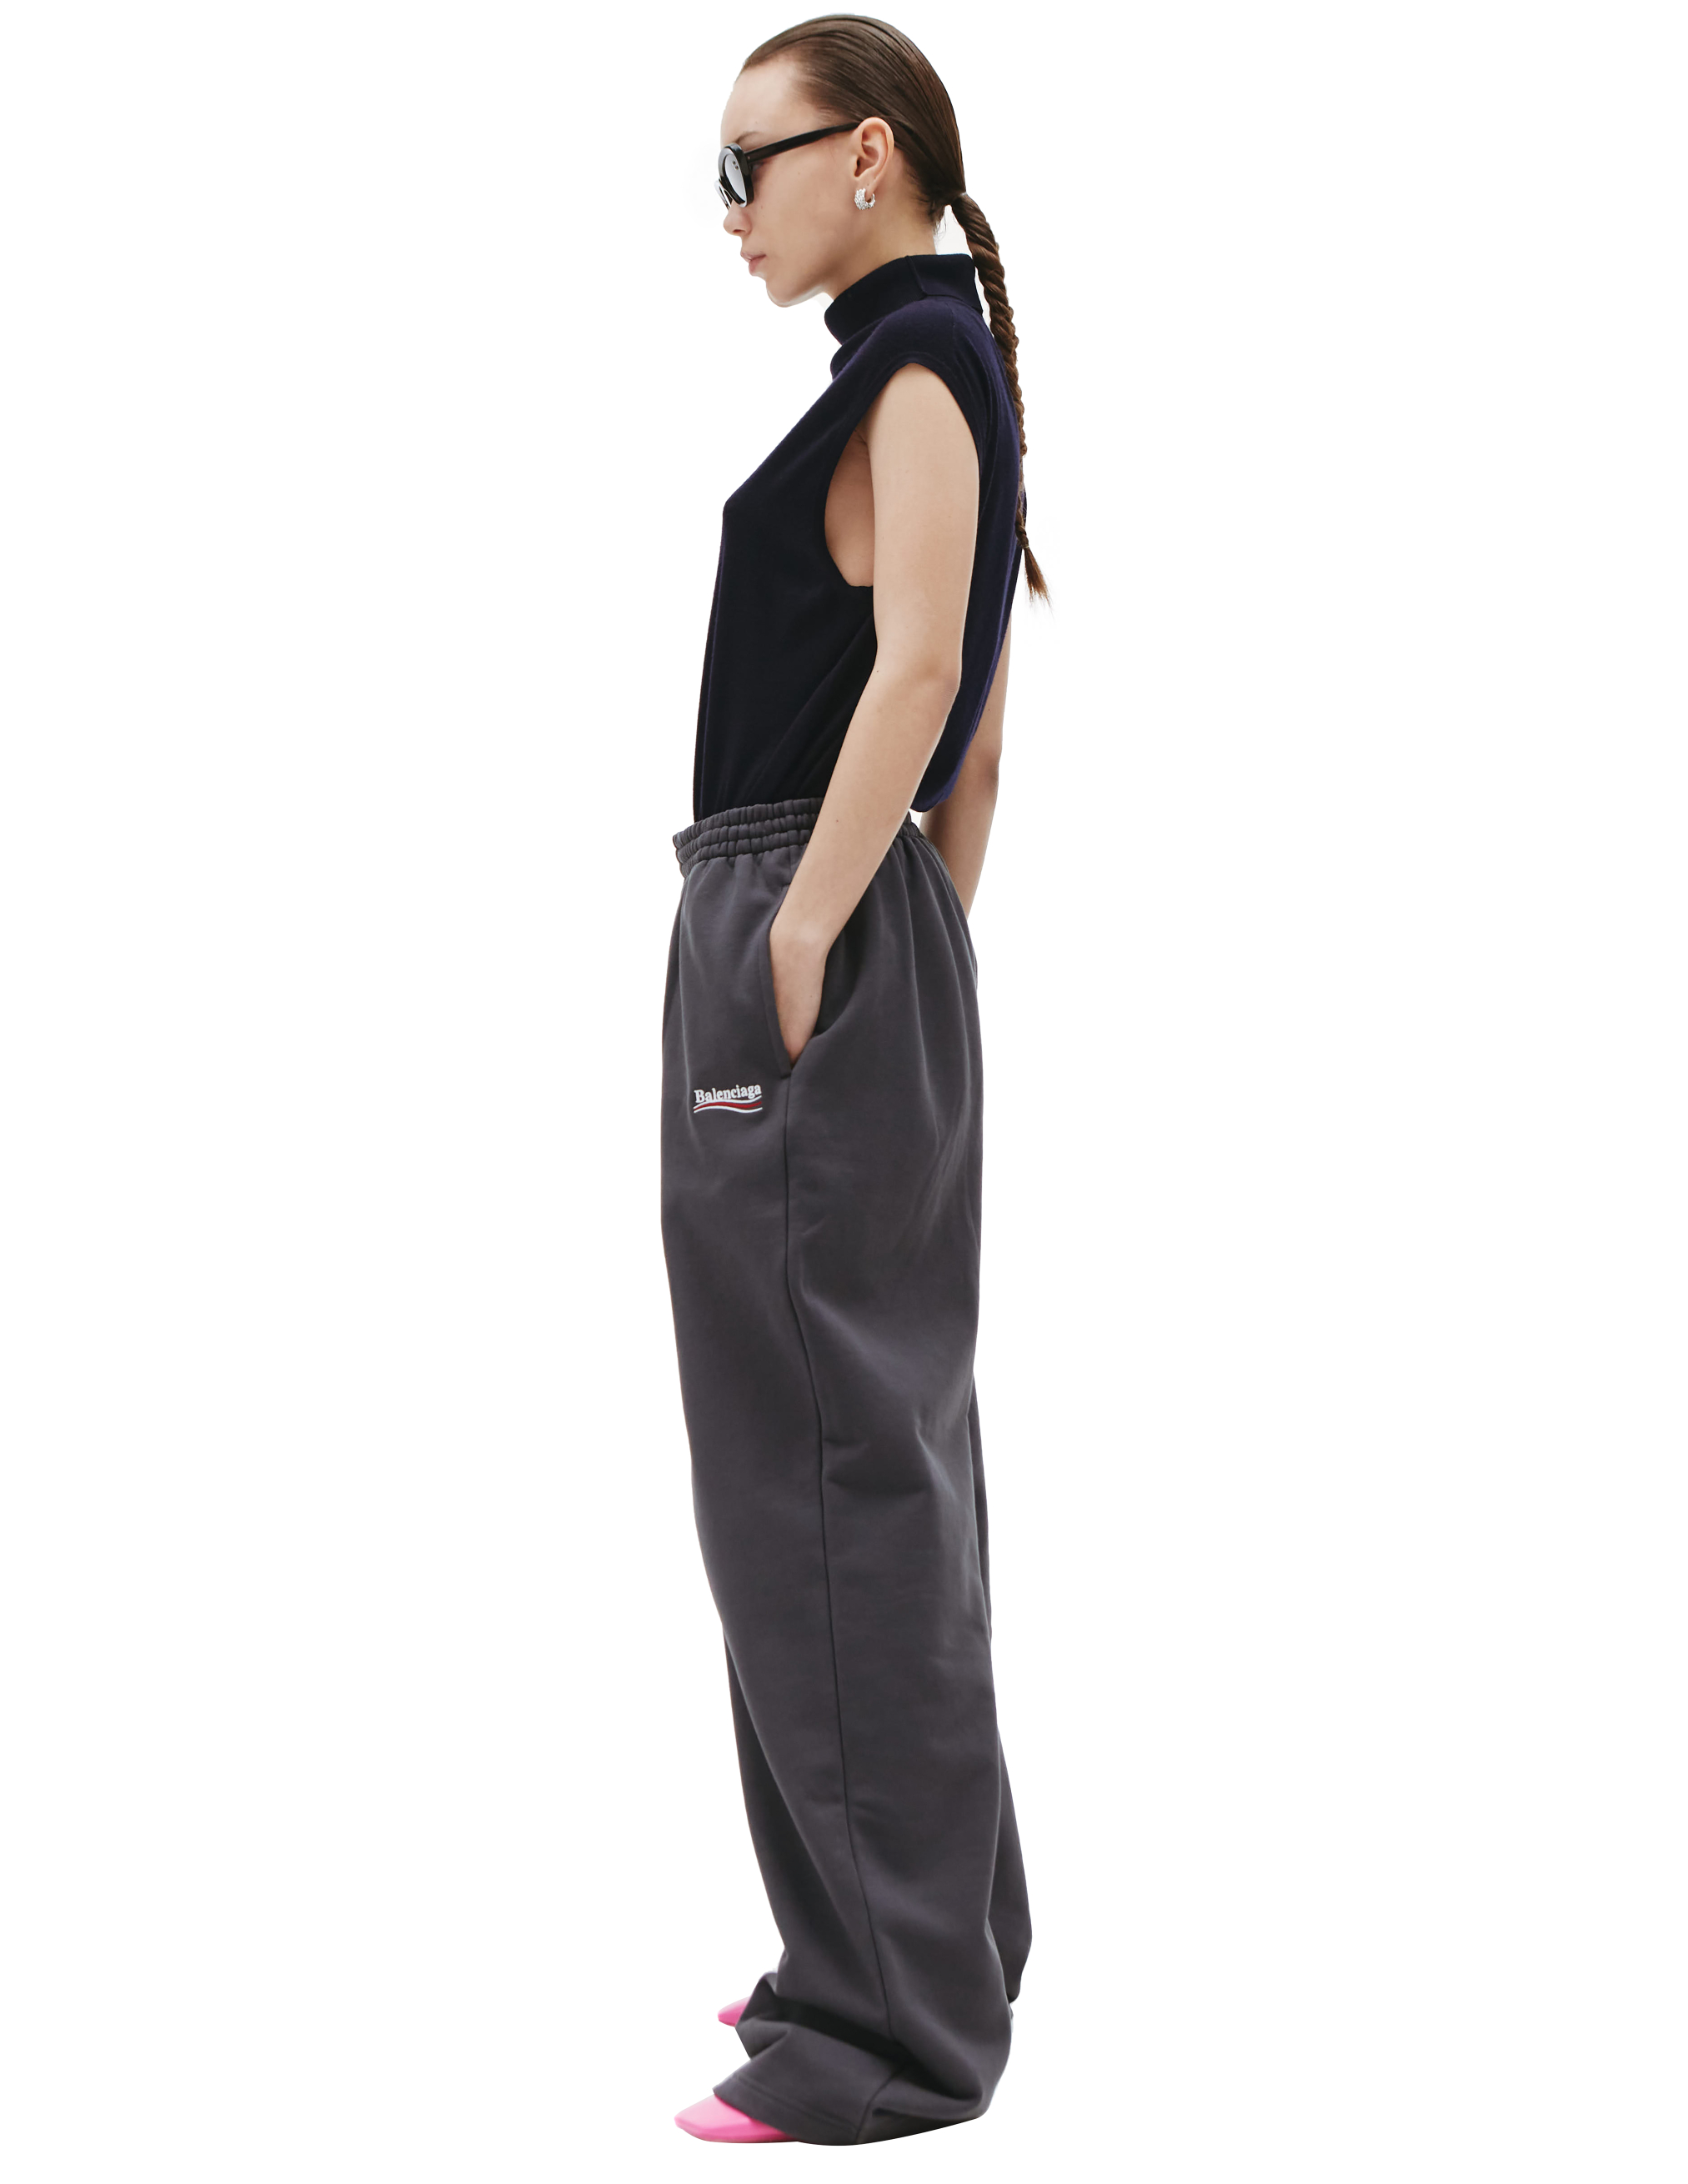 Широкие брюки с вышивкой логотипа Balenciaga 674594/TKVI9/1366, размер XXL;M;S 674594/TKVI9/1366 - фото 3